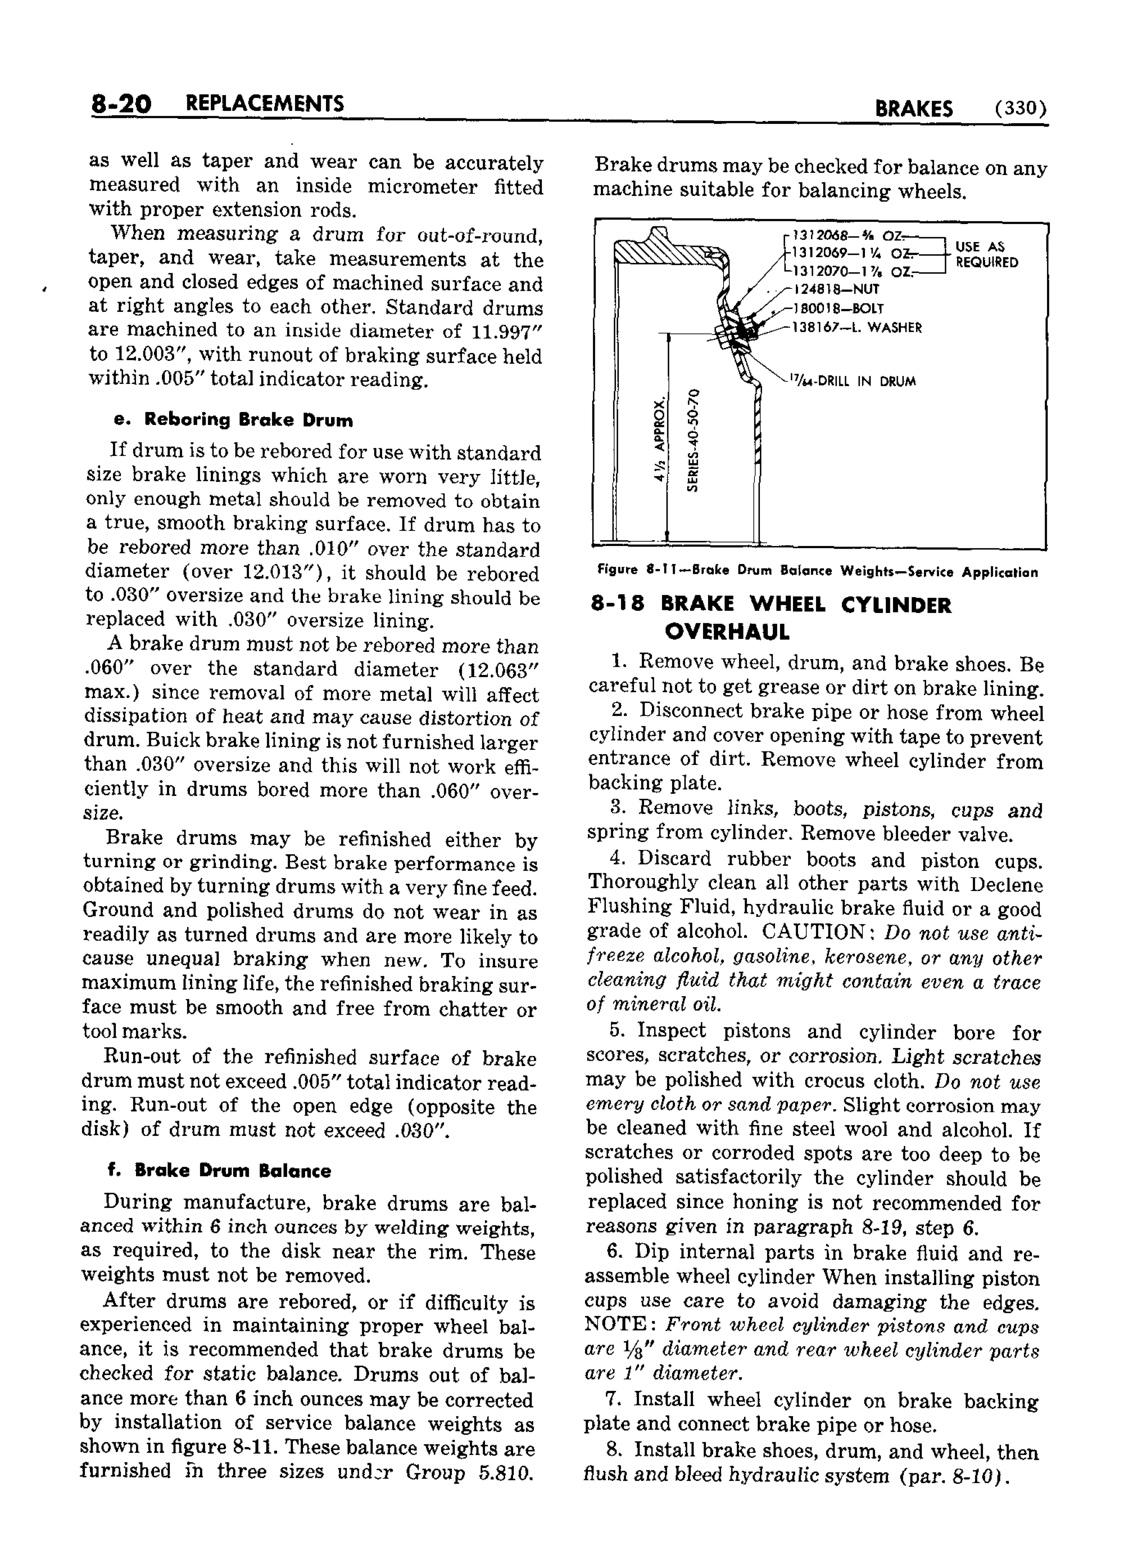 n_09 1952 Buick Shop Manual - Brakes-020-020.jpg